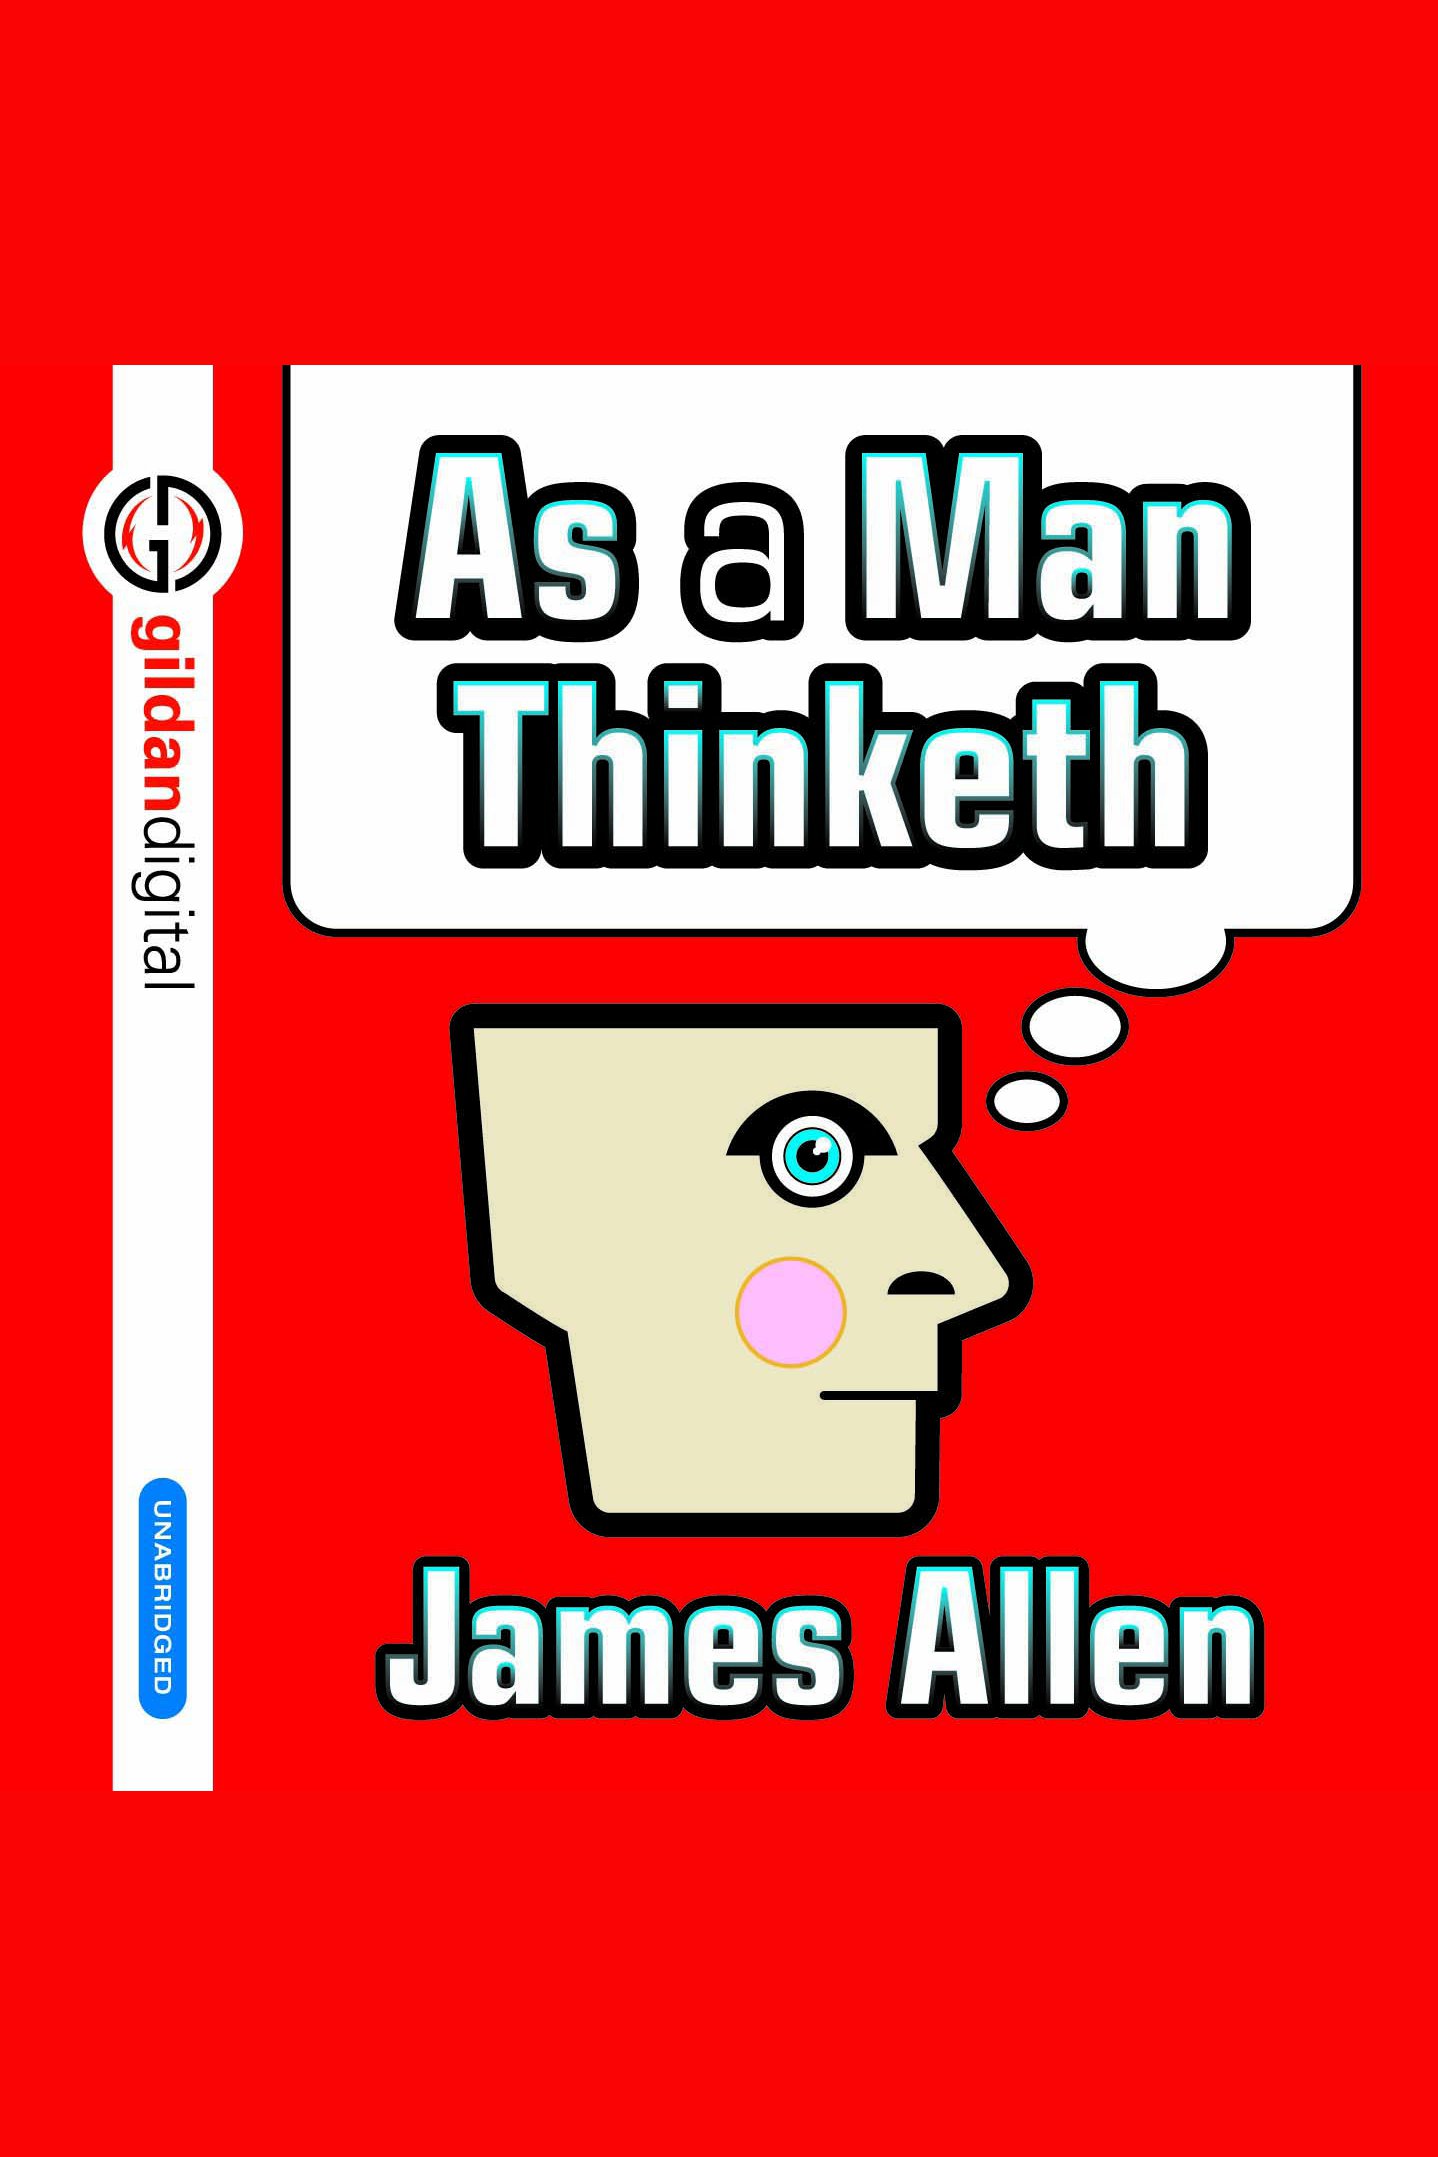 As Man Thinketh cover image